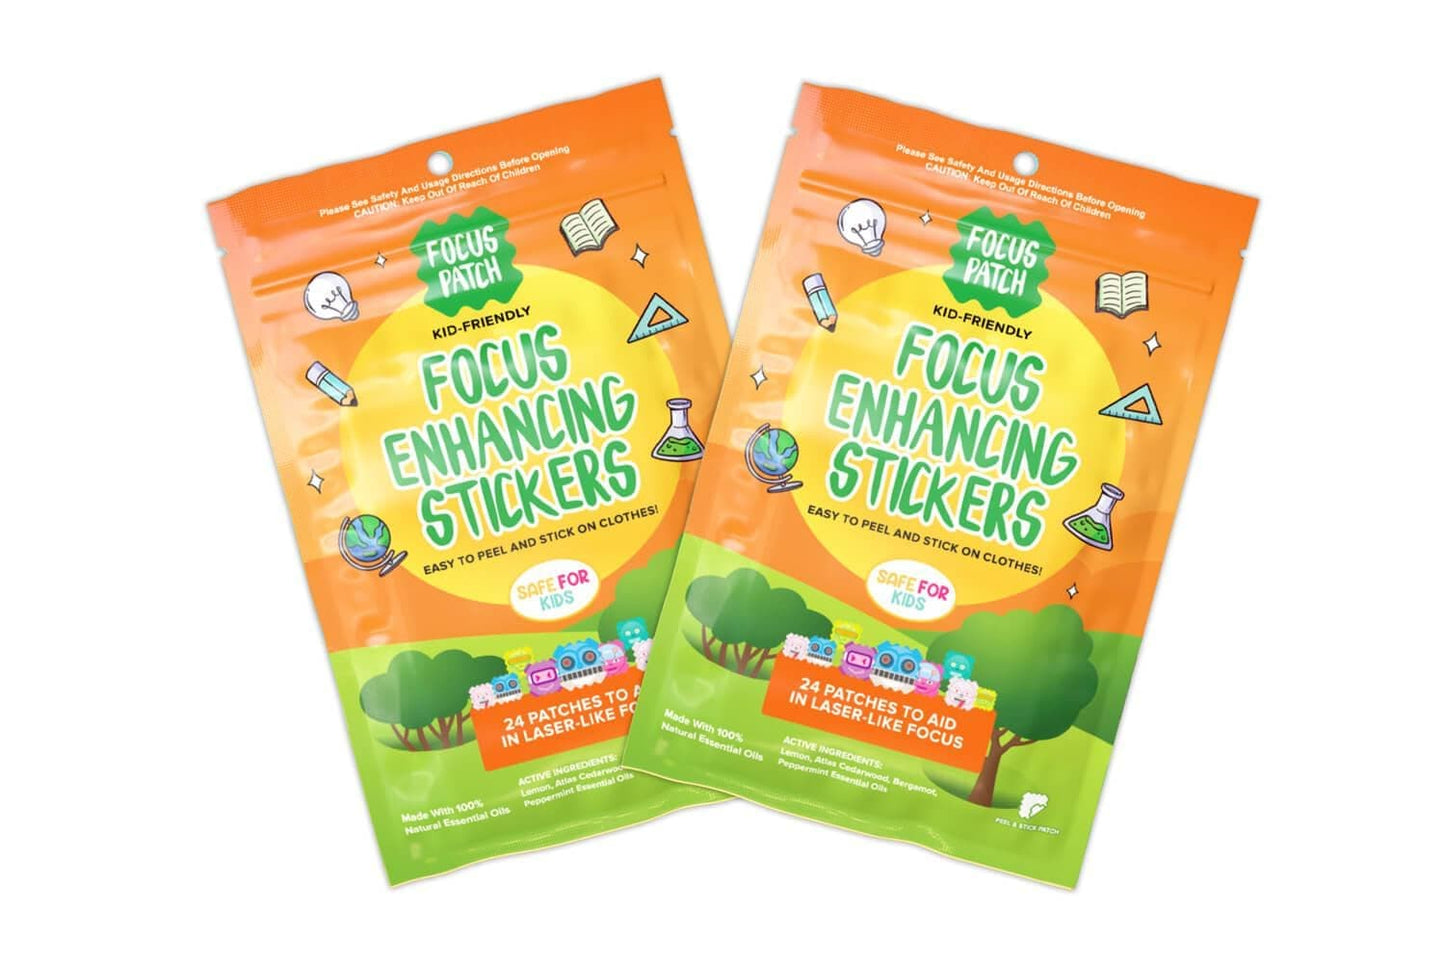 *FocusPatch Focus Enhancing Stickers